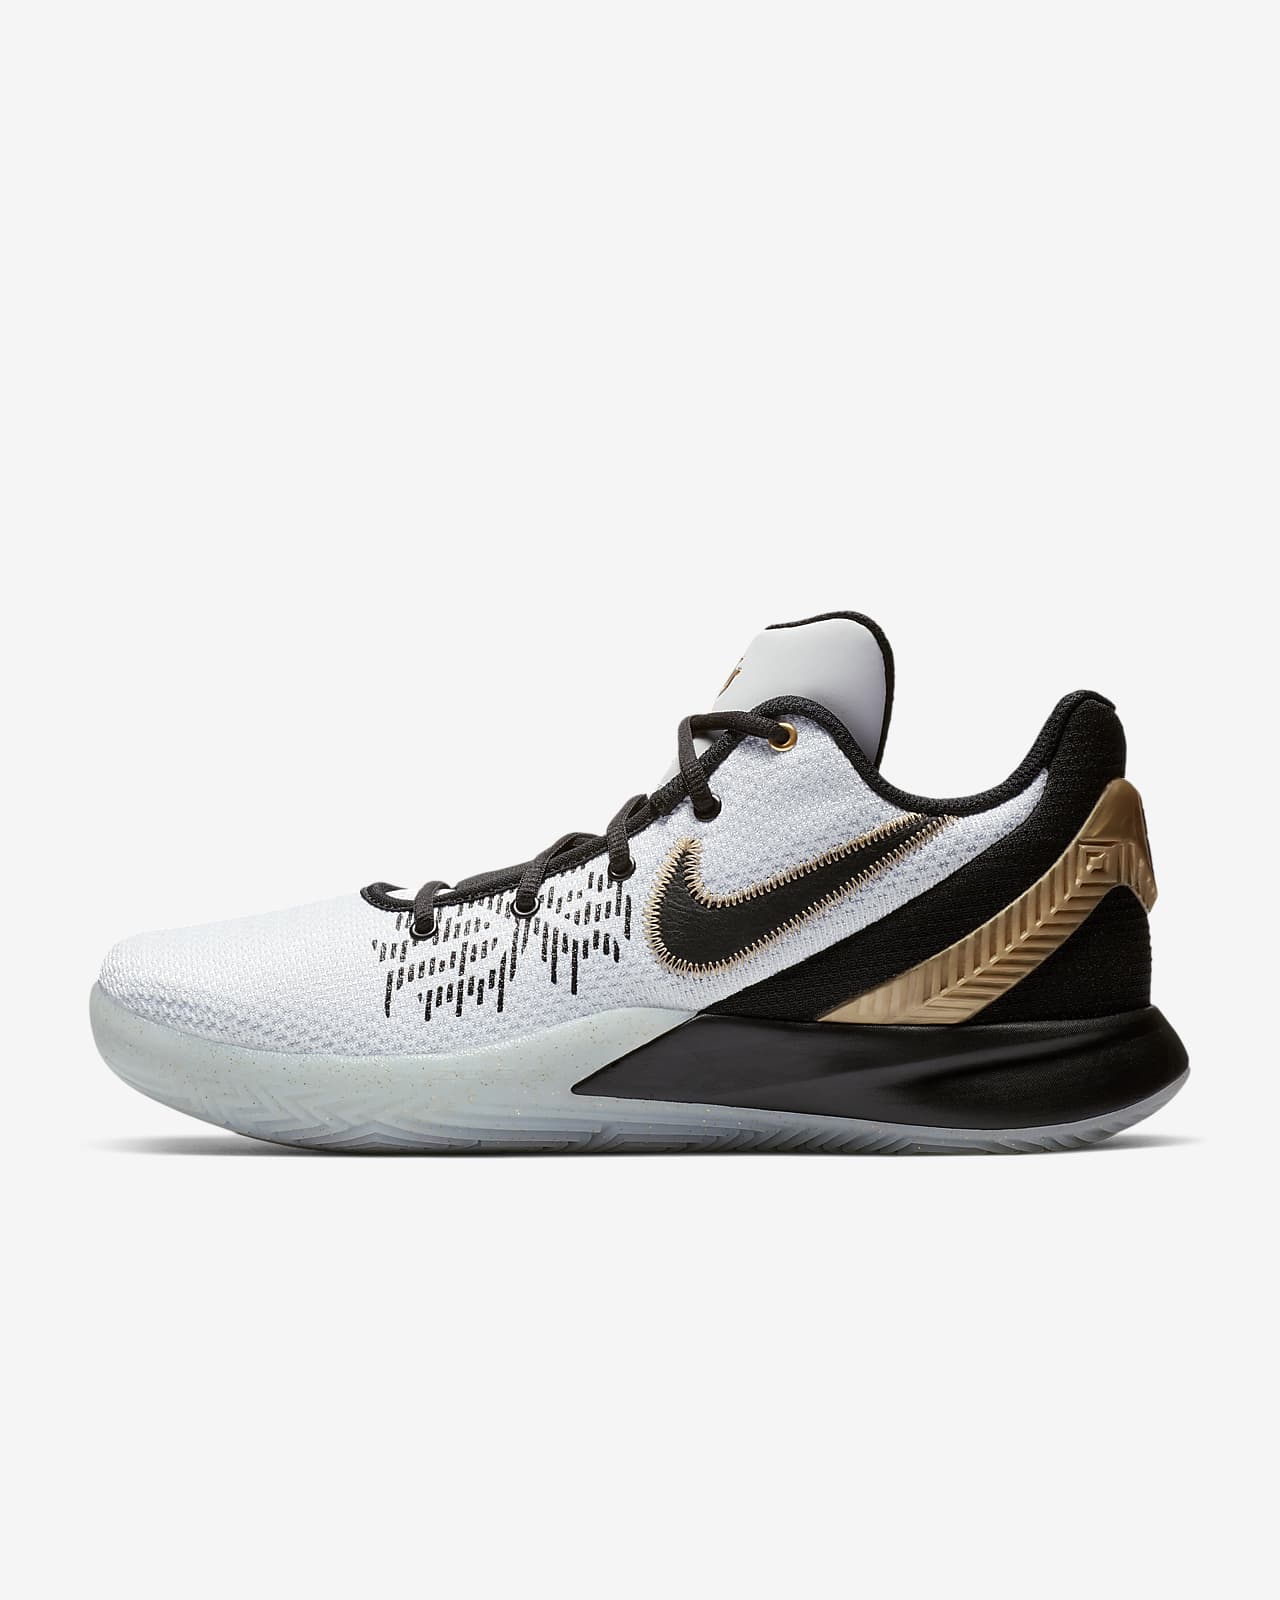 Kyrie Flytrap II EP Basketball Shoe 